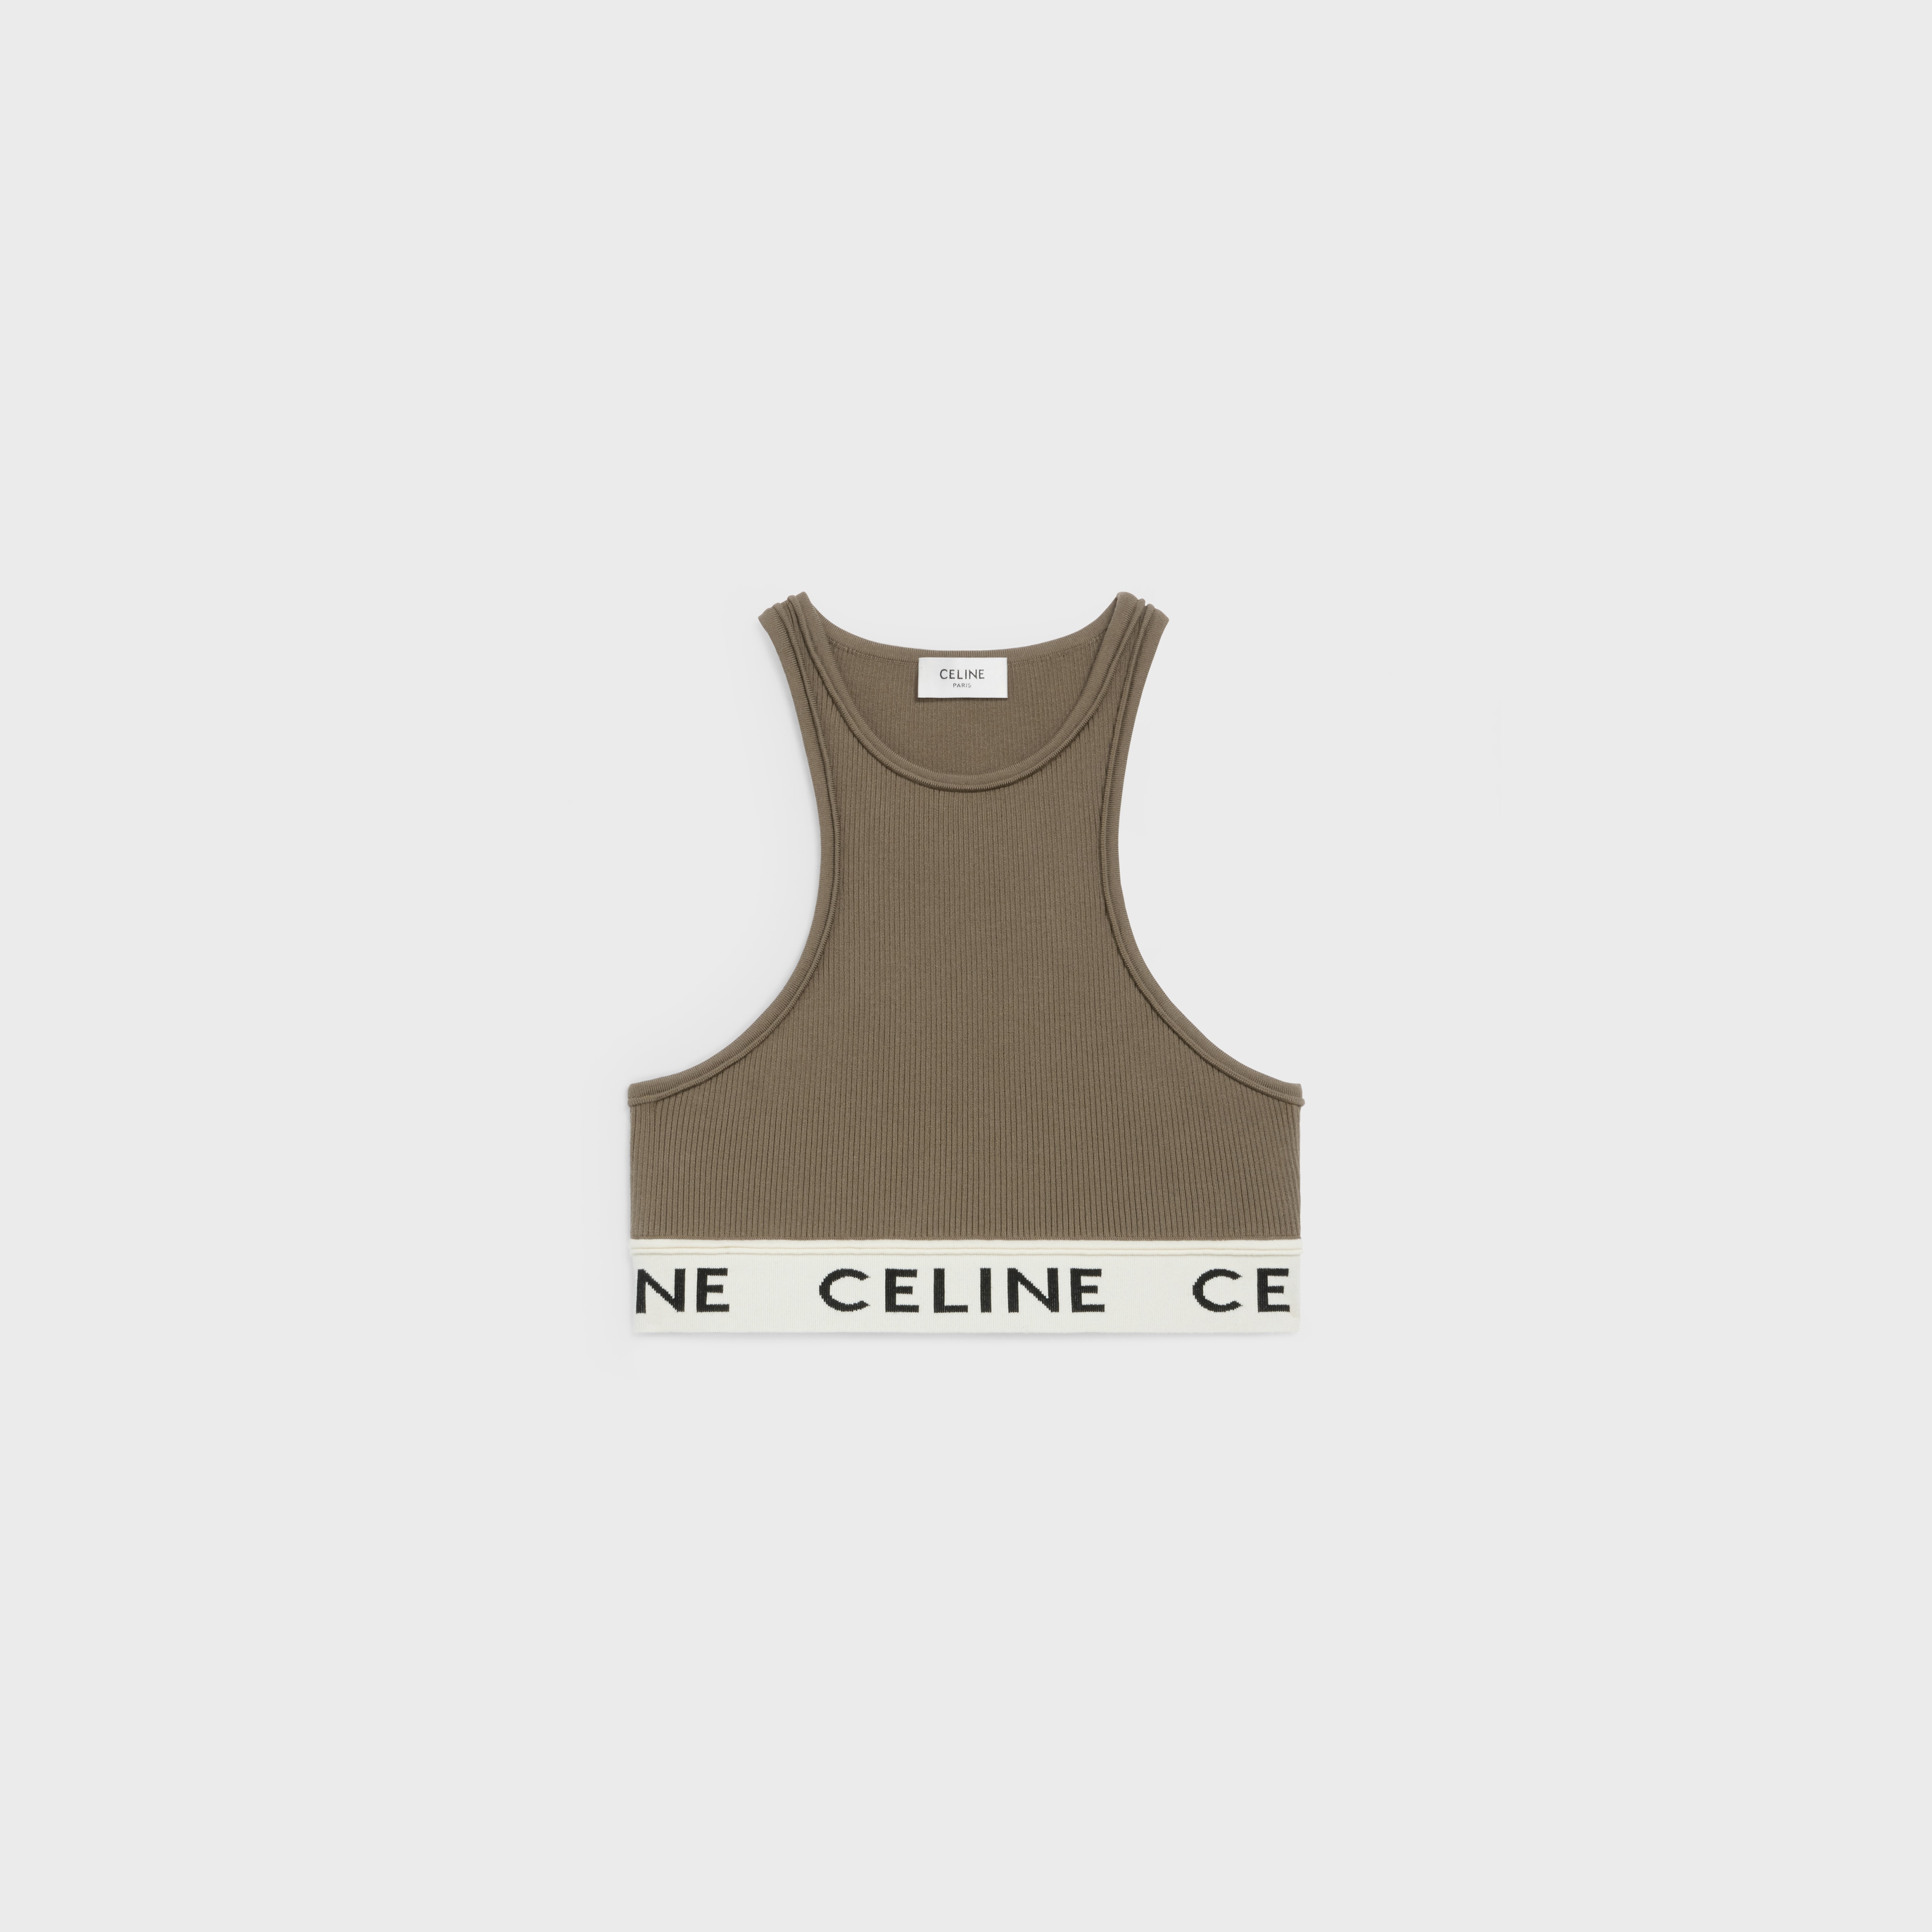 Celine sports bra in athletic knit - 1